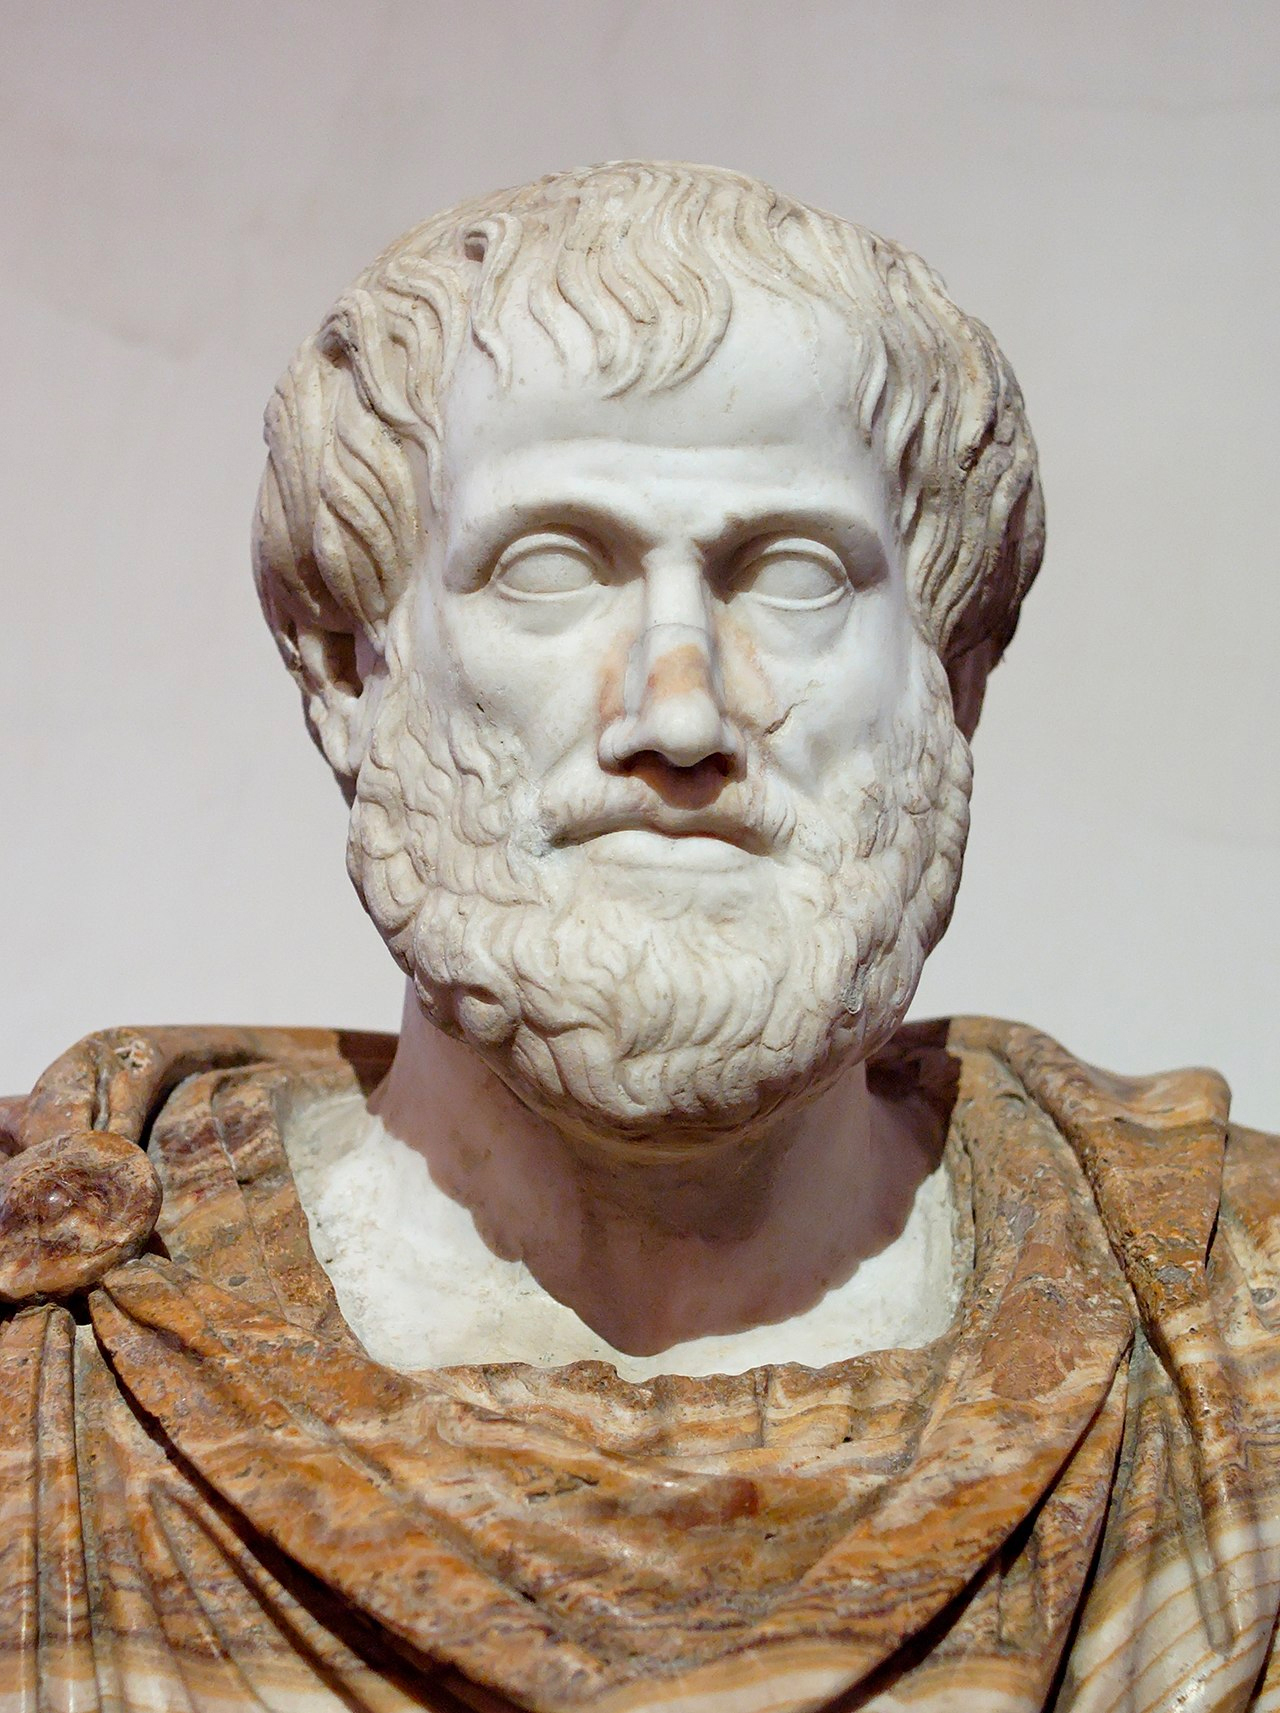 Busto de Aristóteles realizado en mármol. Copia romana de un original del escultor griego Lisipo. Colección Ludovisi, Palacio Altemps, Roma.